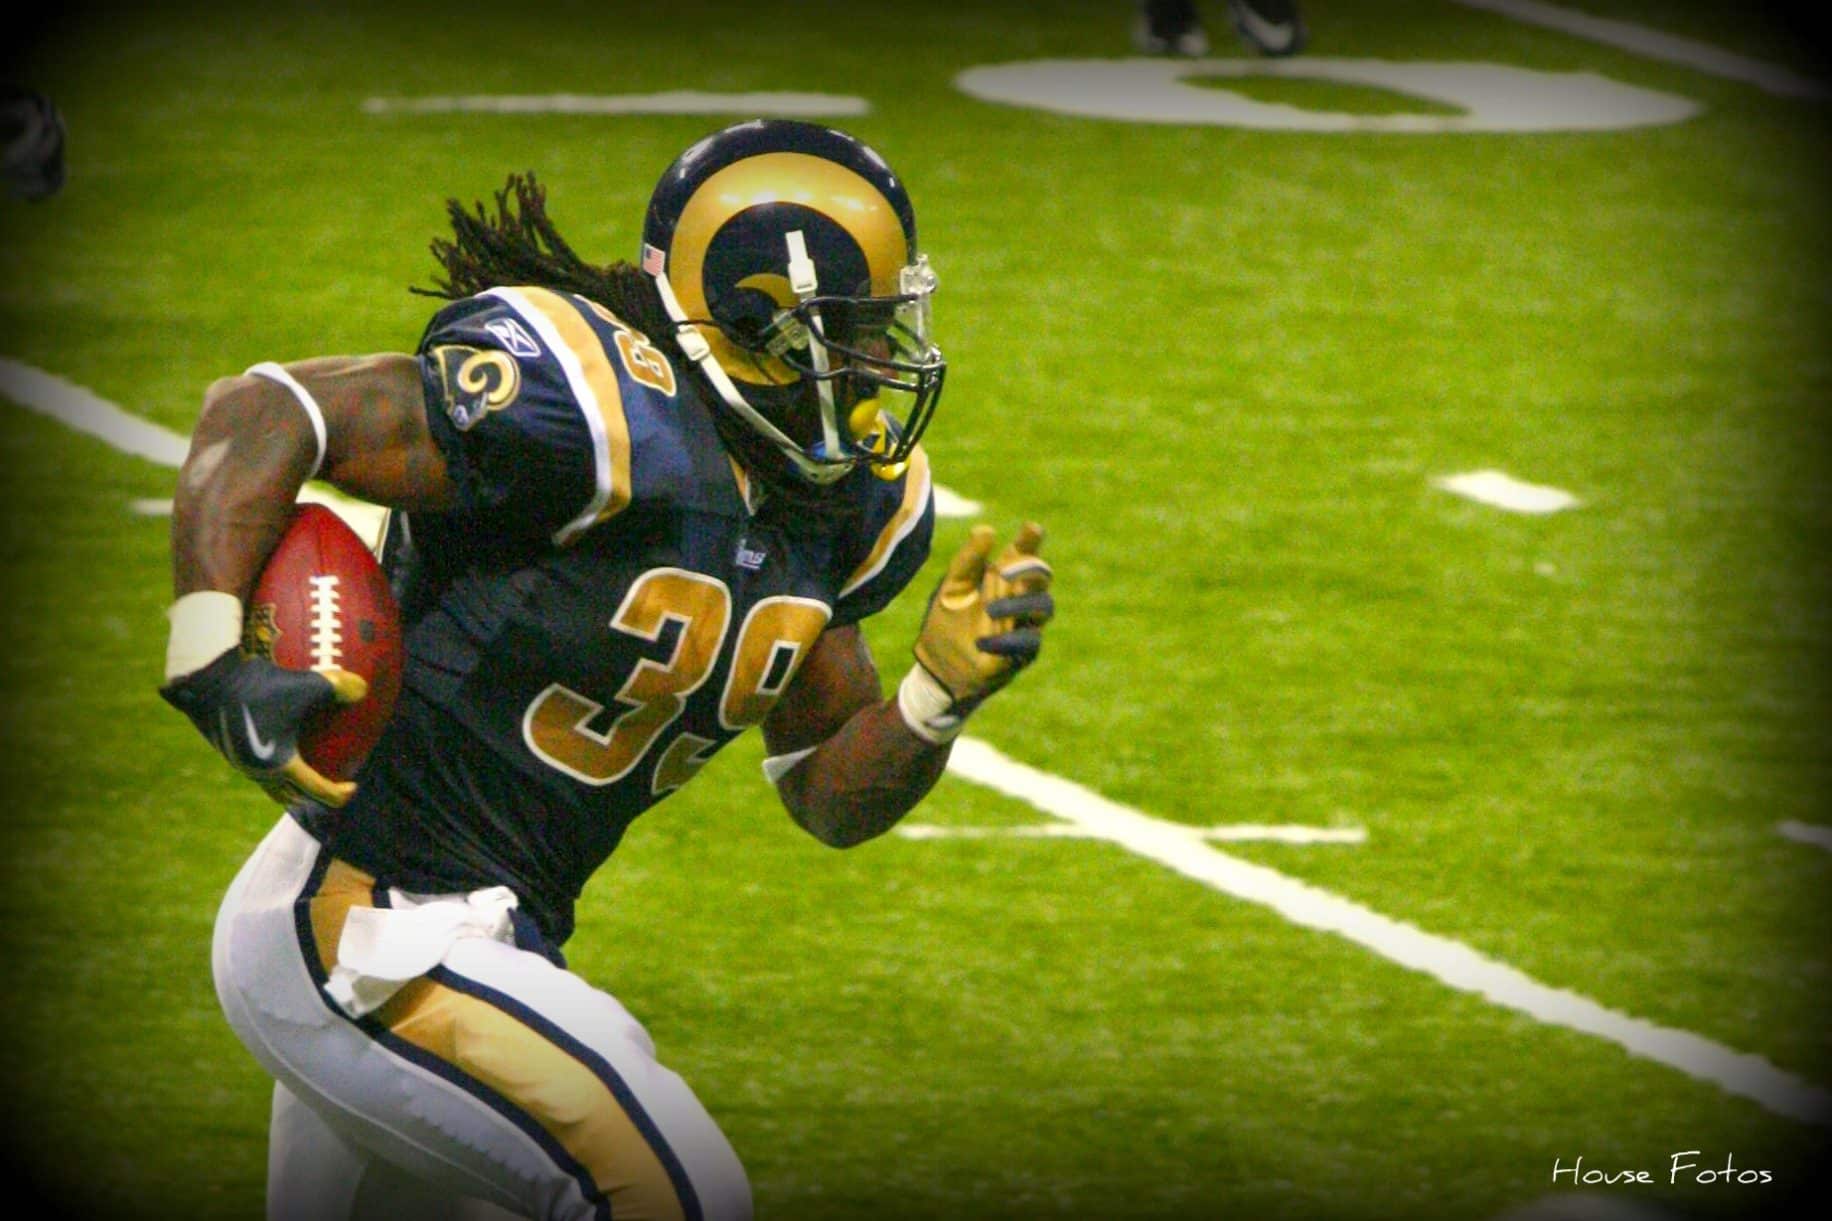 Former Rams Running Back Steven Jackson. Photo Credit: Darin House | Under Creative Commons License